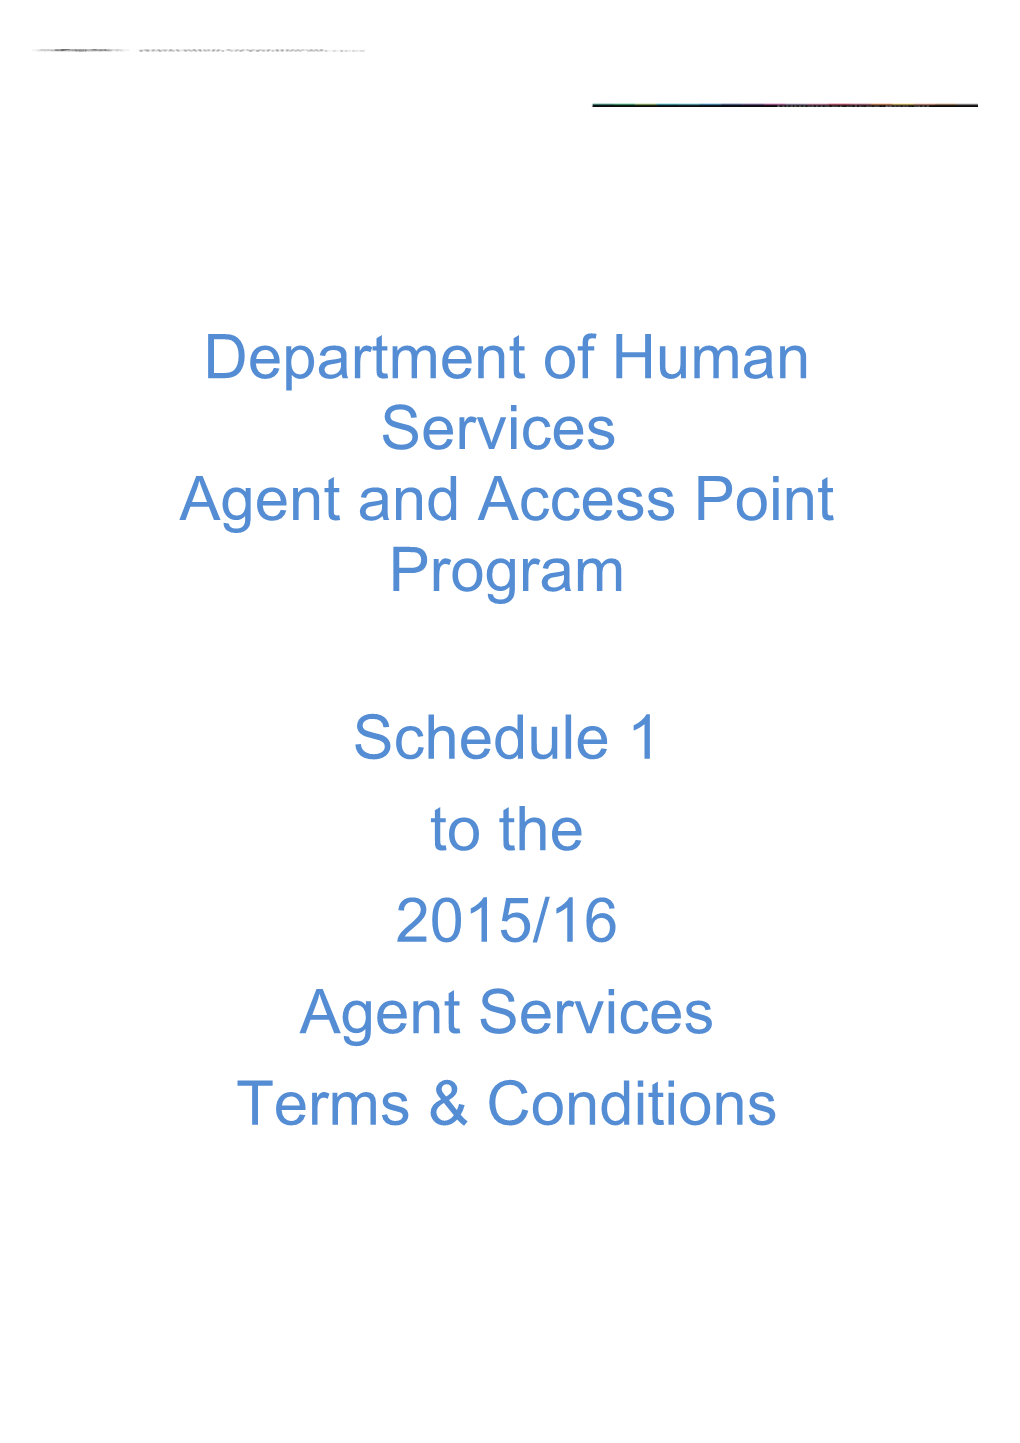 15-16 Schedule 1 Agent Services